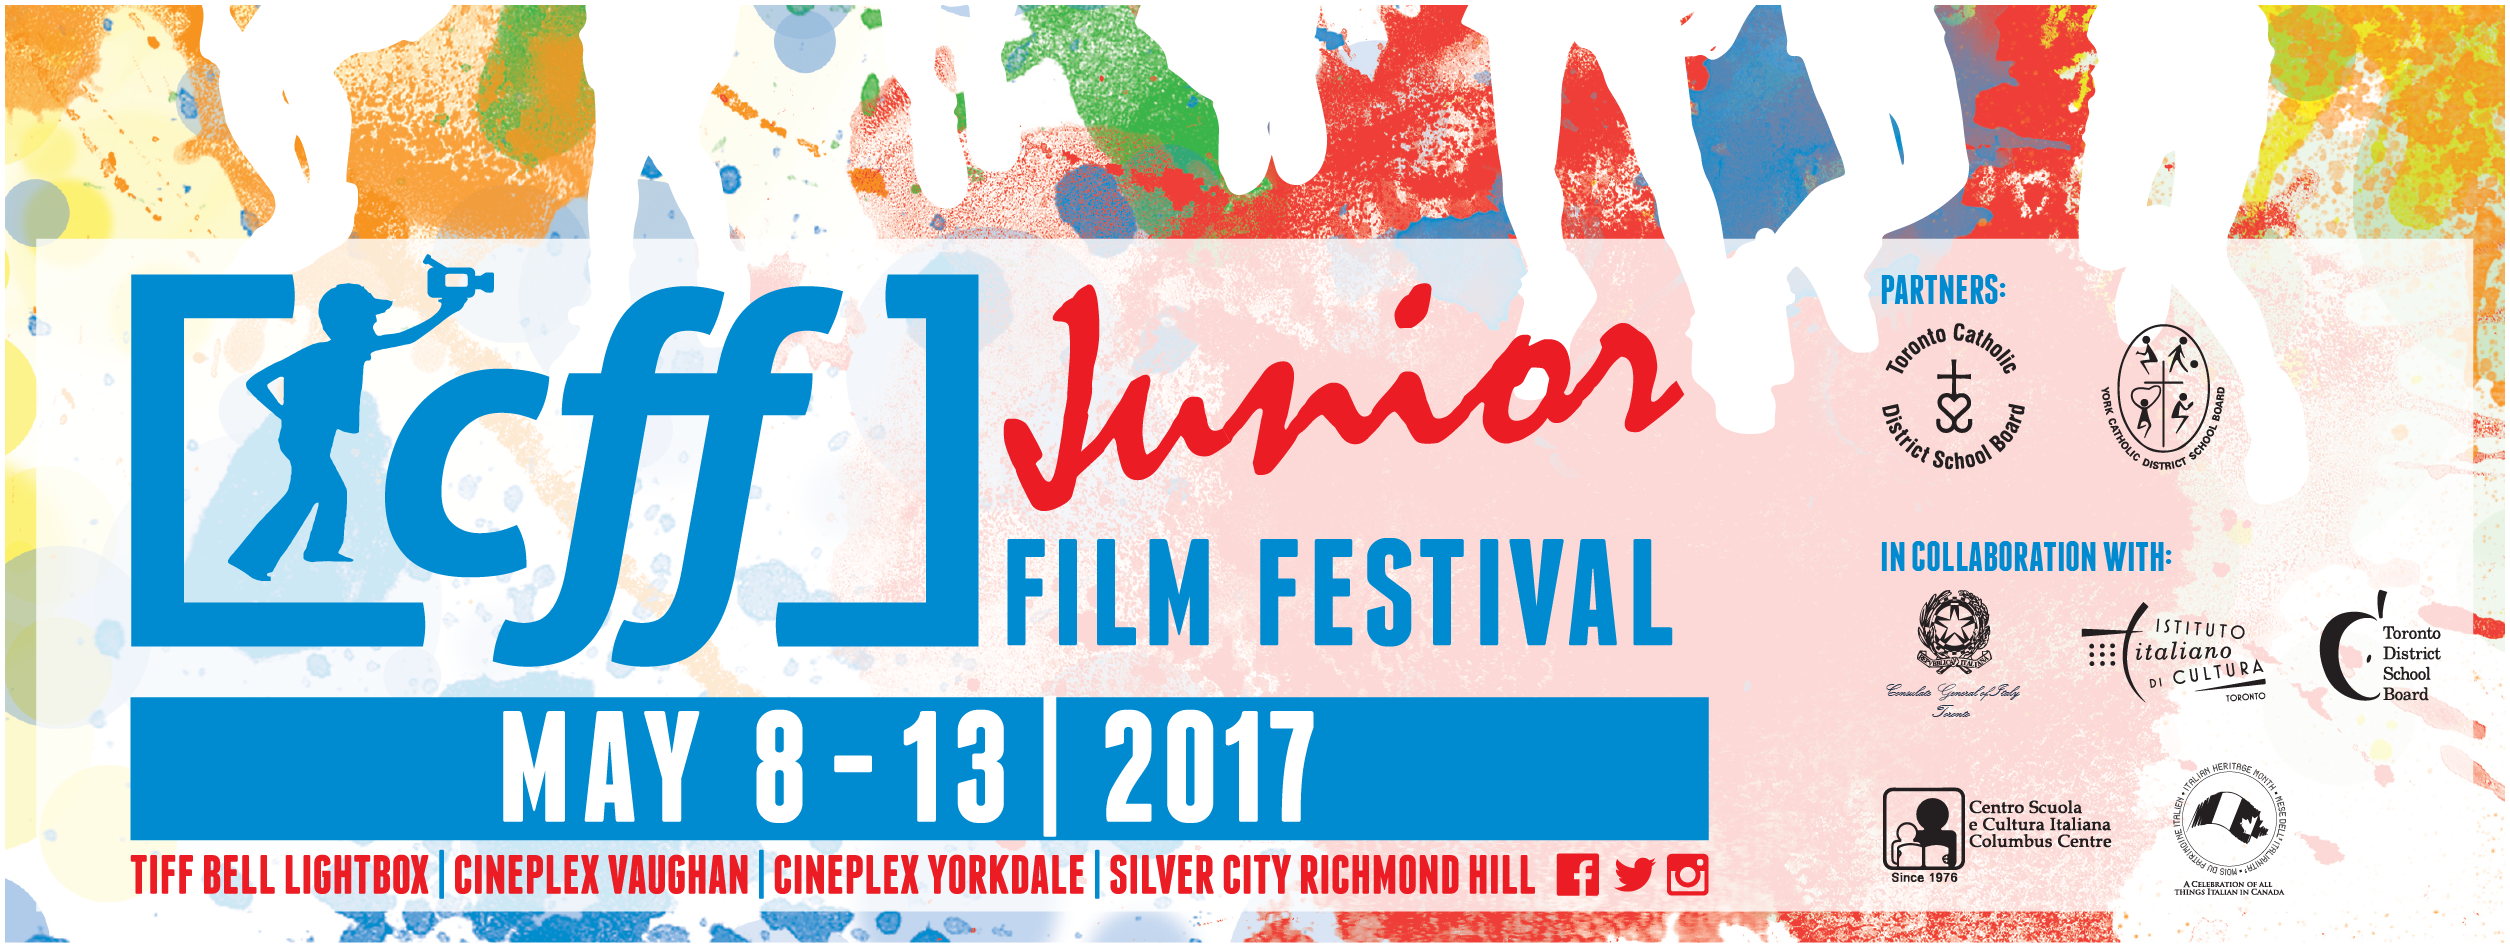 ICFF Junior Film Festival Promotional Banner.